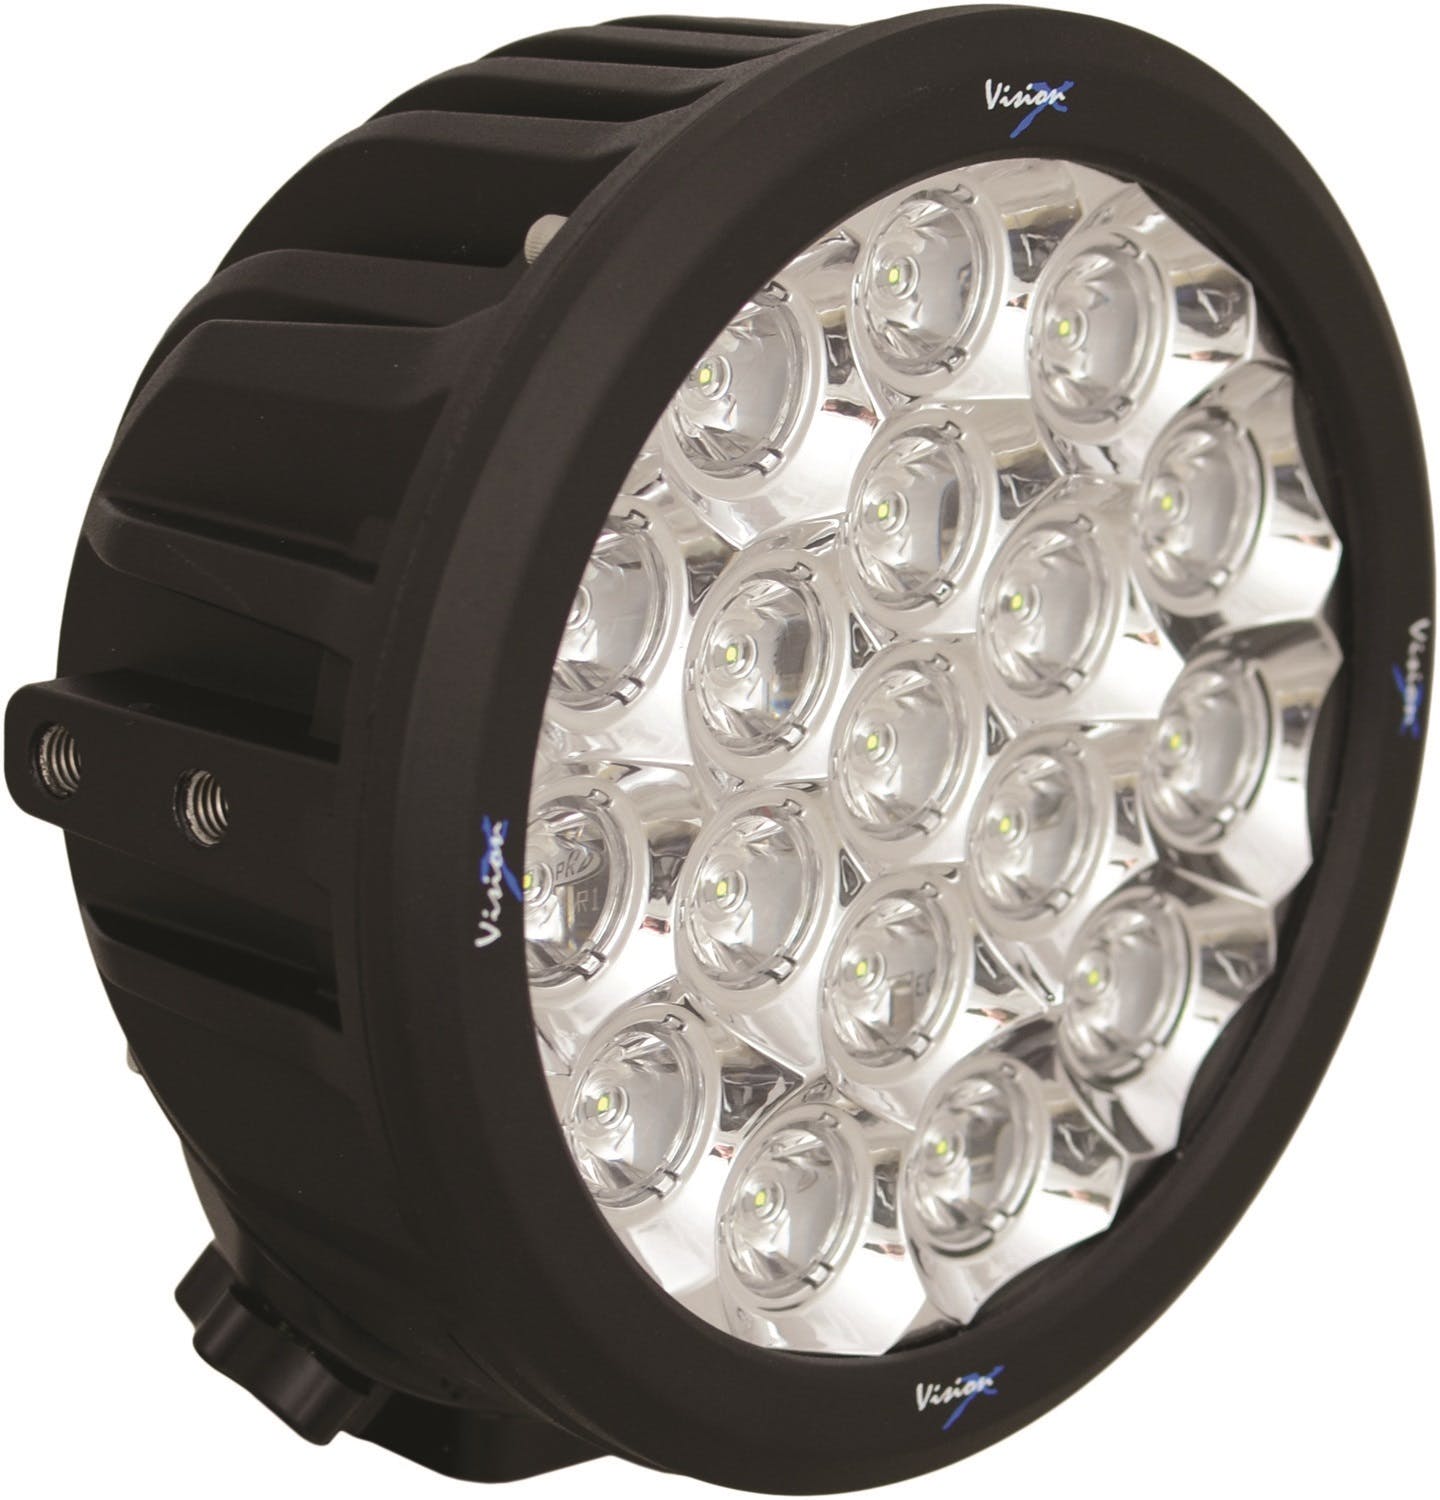 Vision X 9111018 6.5" Transporter Xtreme Prime LED Light